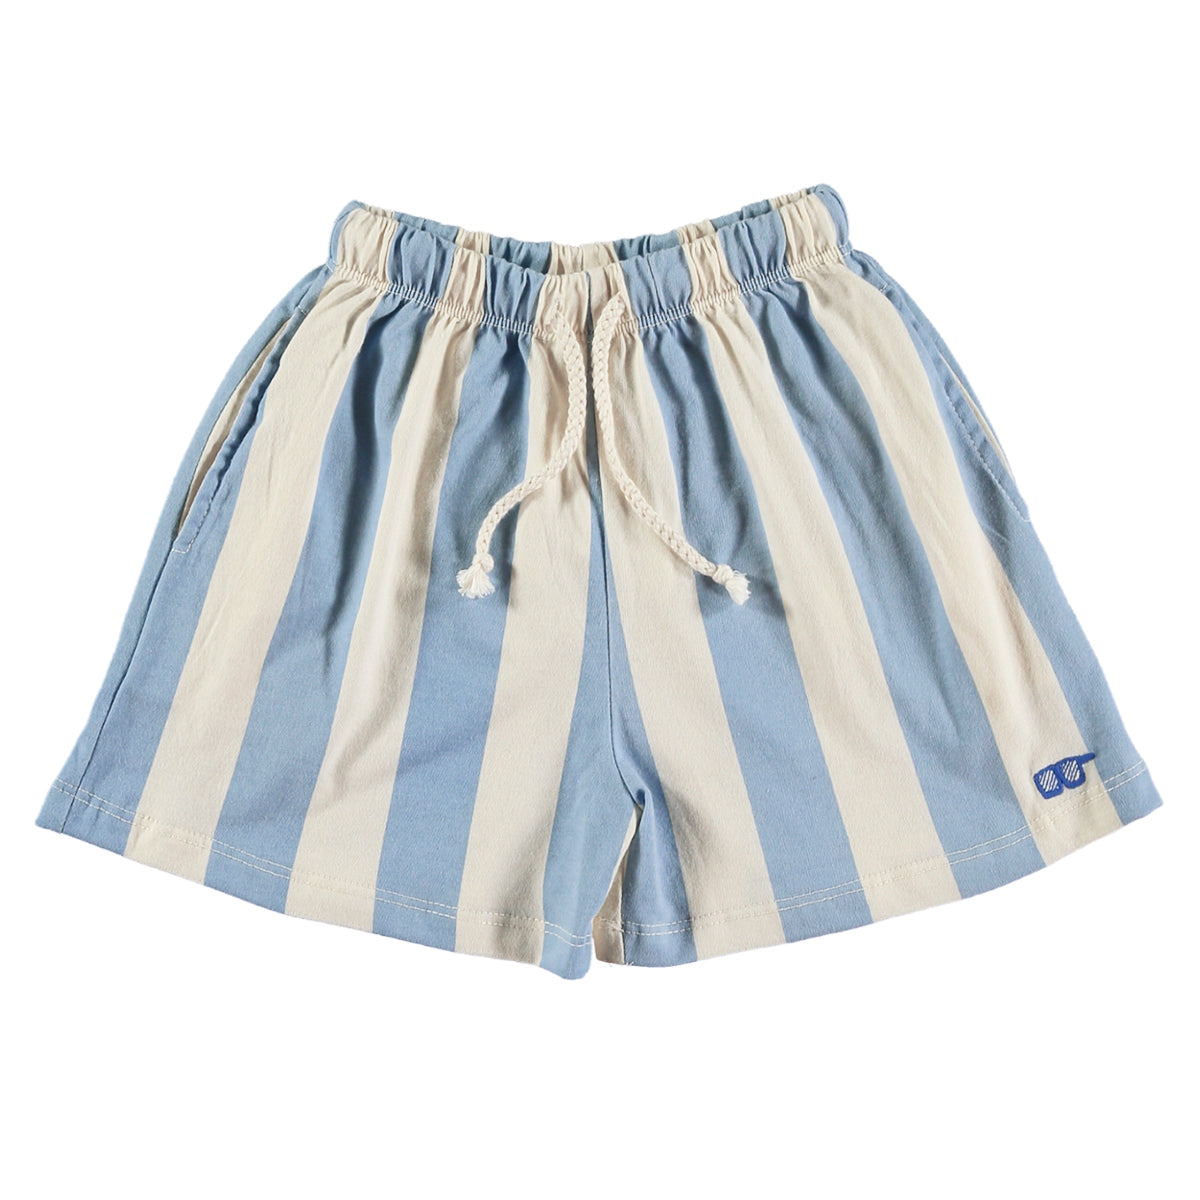 Lotiekids | Bermuda shorts | Stripes Off white & blue